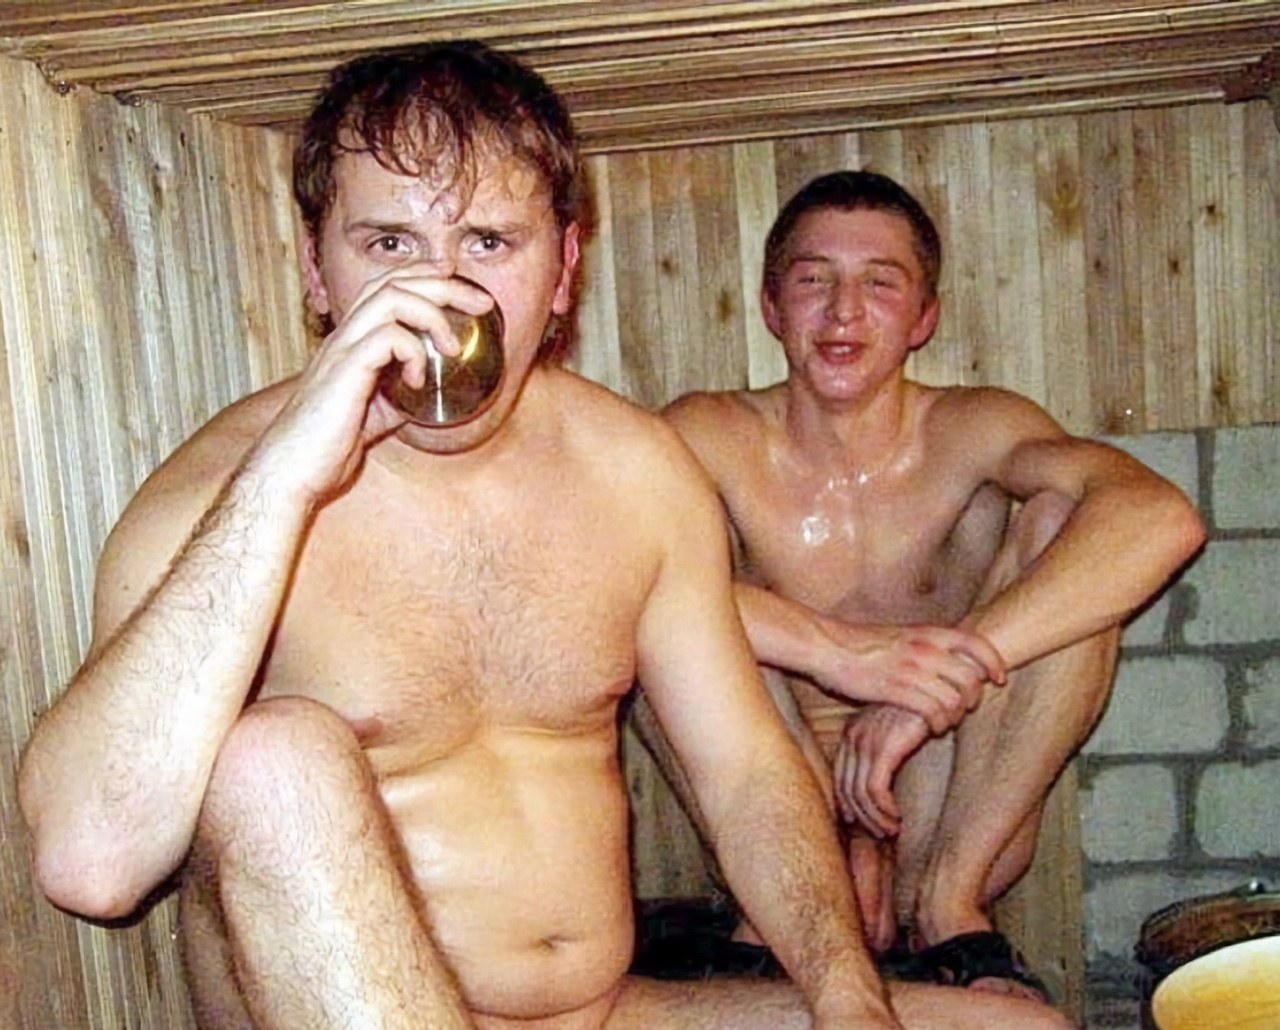 Мужики в бане без трусов (62 фото) - секс и порно